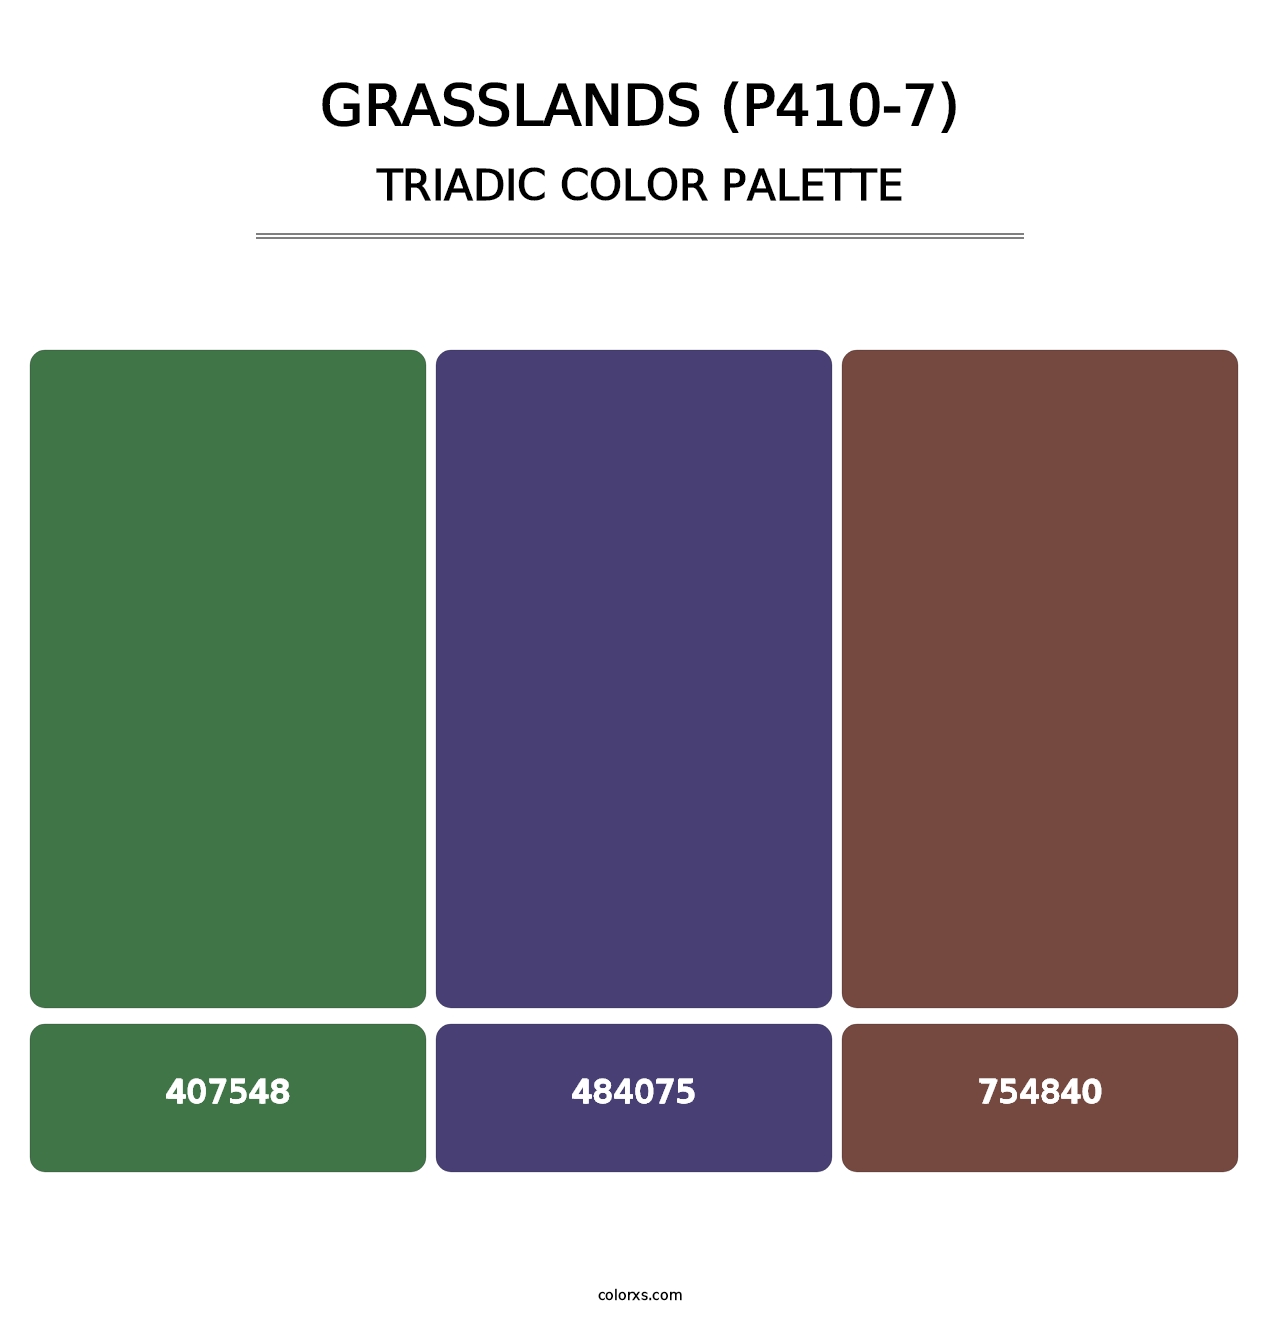 Grasslands (P410-7) - Triadic Color Palette